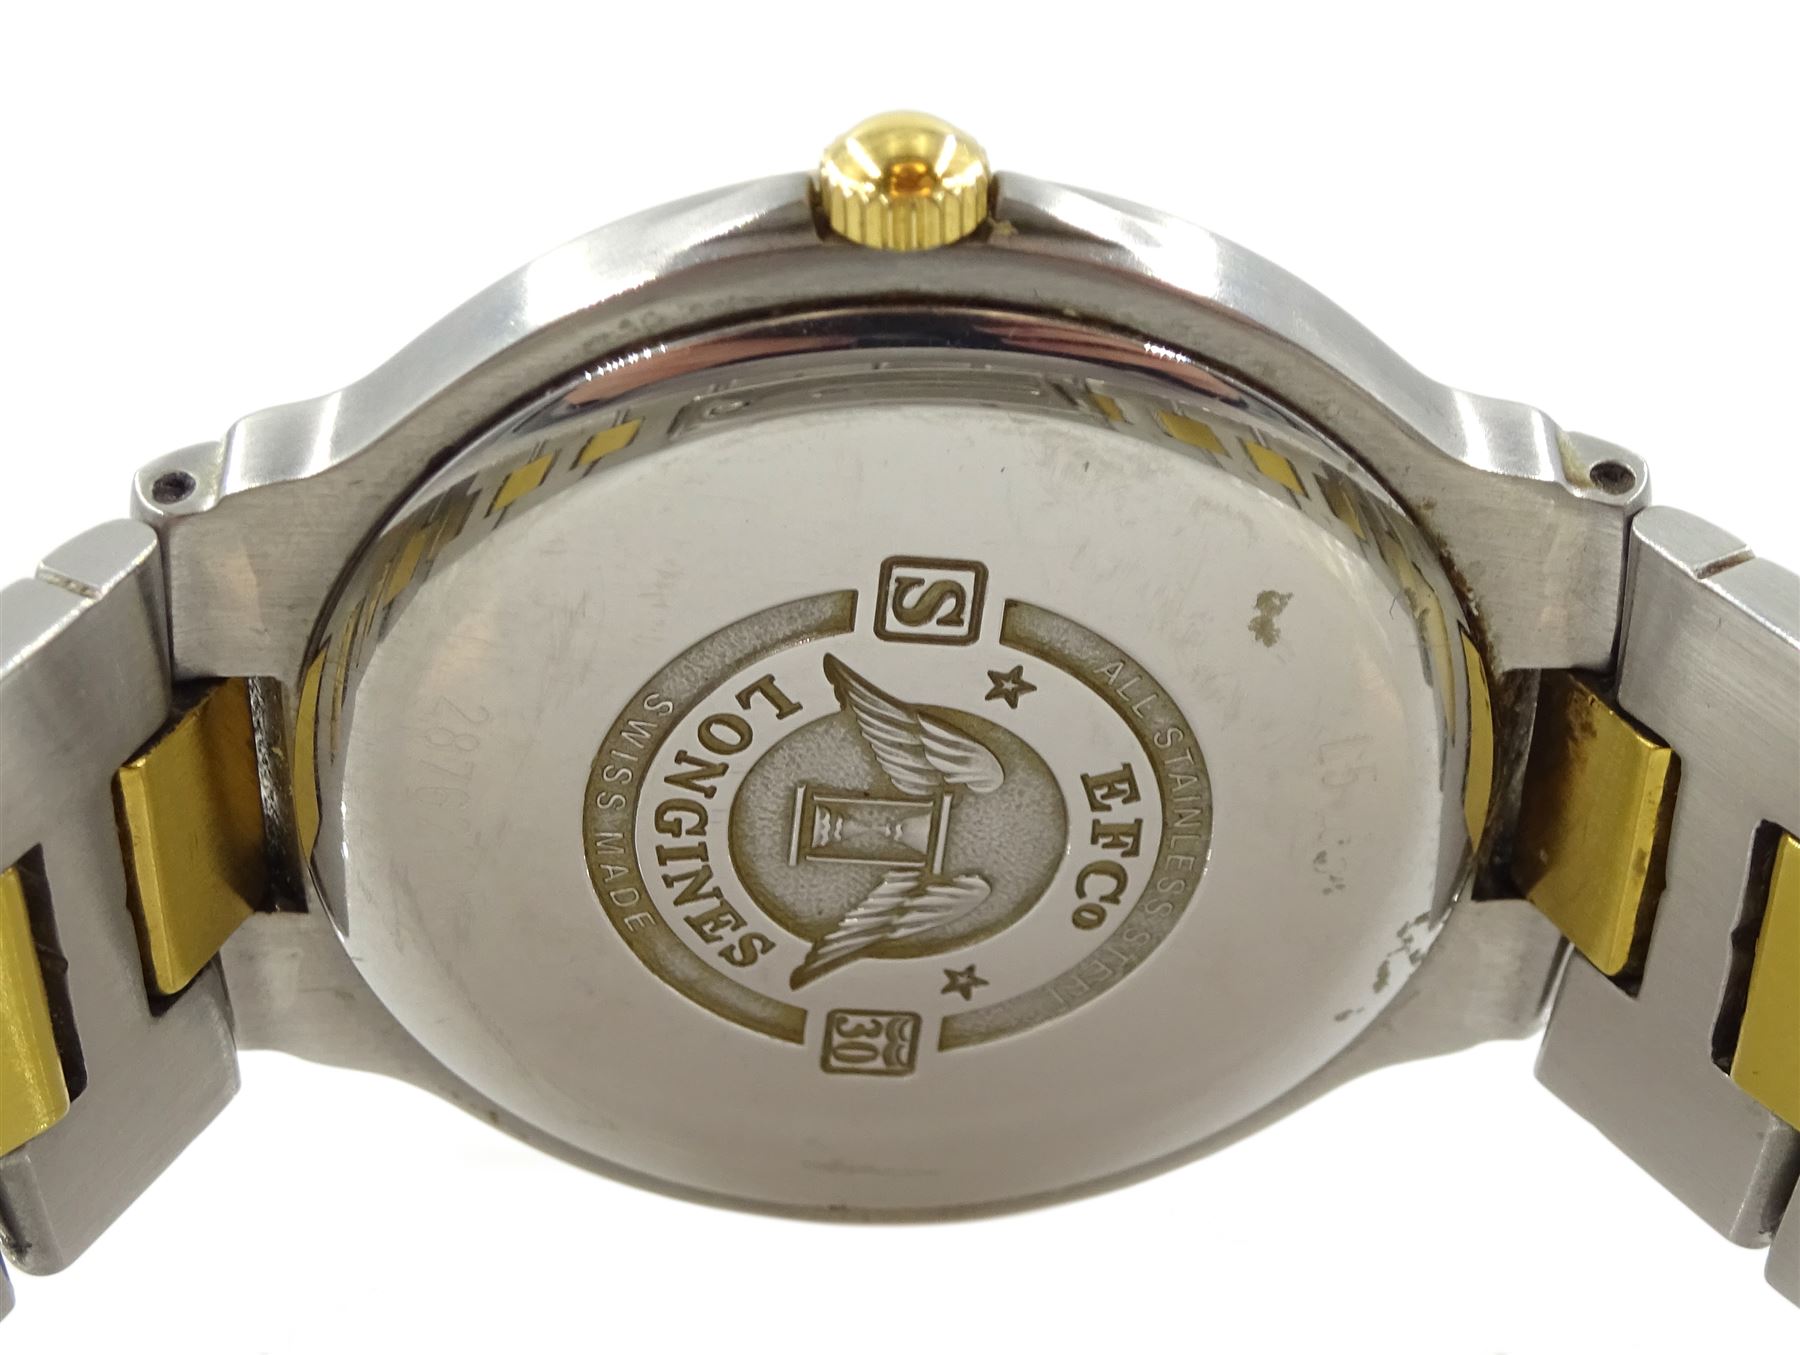 Longinges Flagship quartz two tone stainless steel bracelet wristwatch No. L5 651 3 - Image 3 of 6